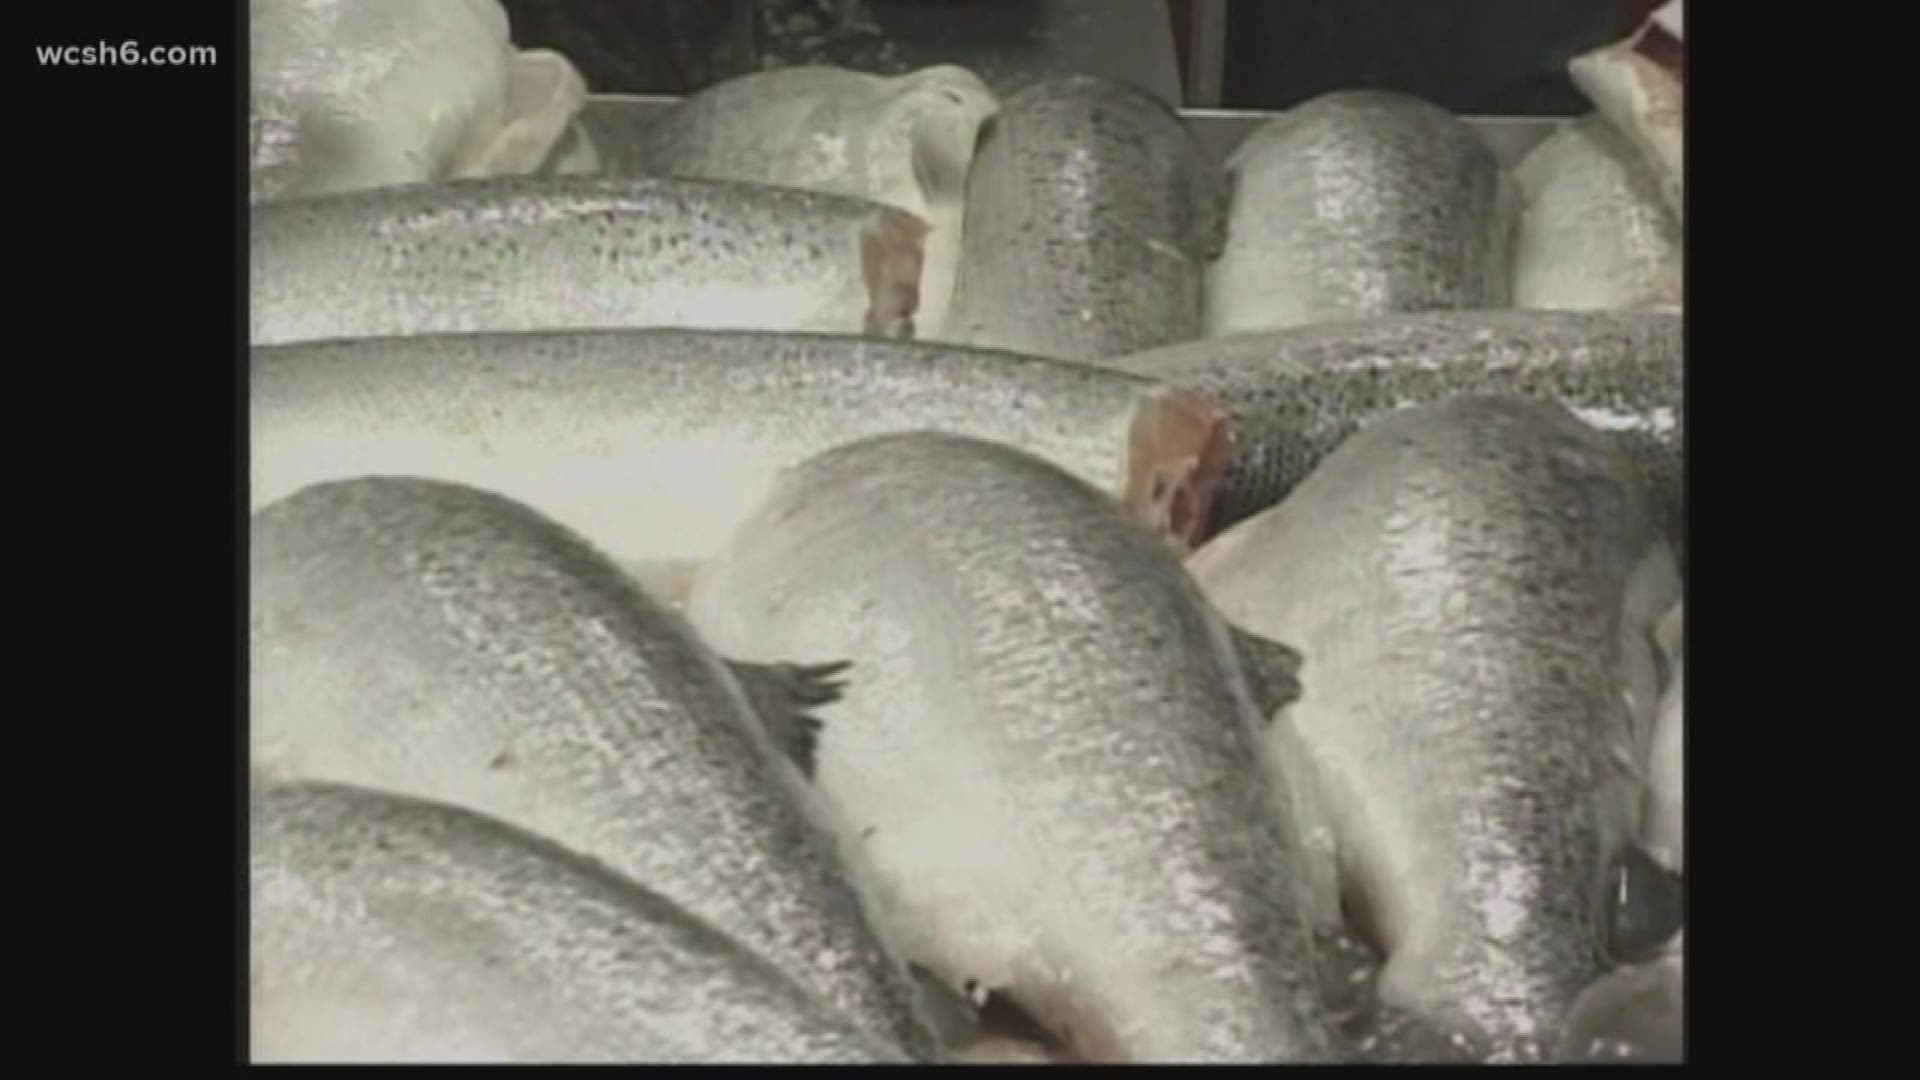 Local Salmon Farming Company Acquires Houston Harvester